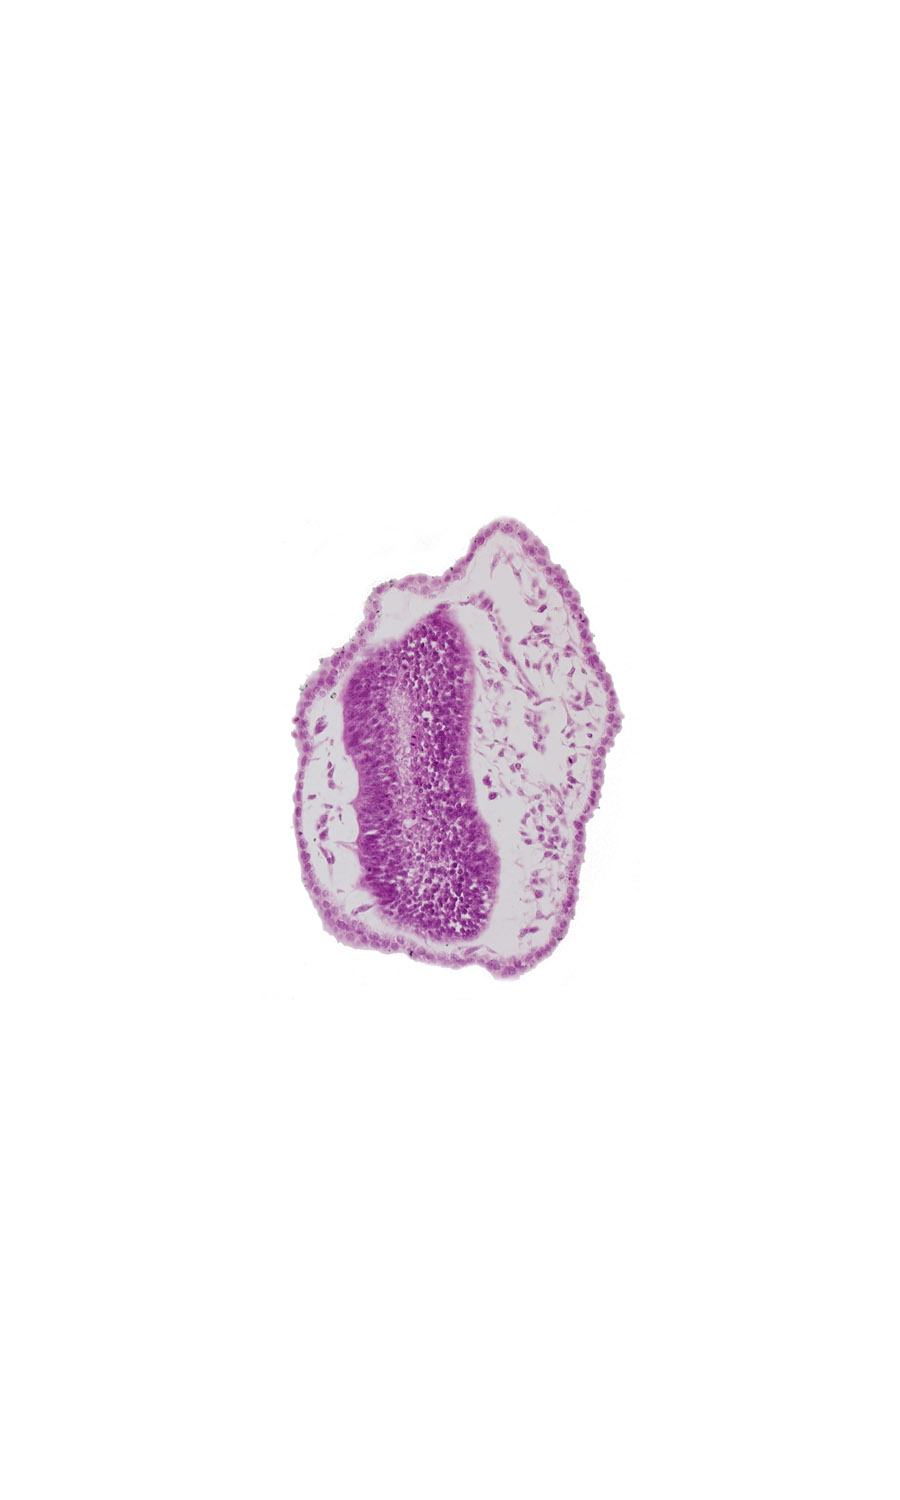 edge of neural tube lumen, head mesenchyme, mesencephalon (M2), rhombencephalon (Rh. 1), surface ectoderm